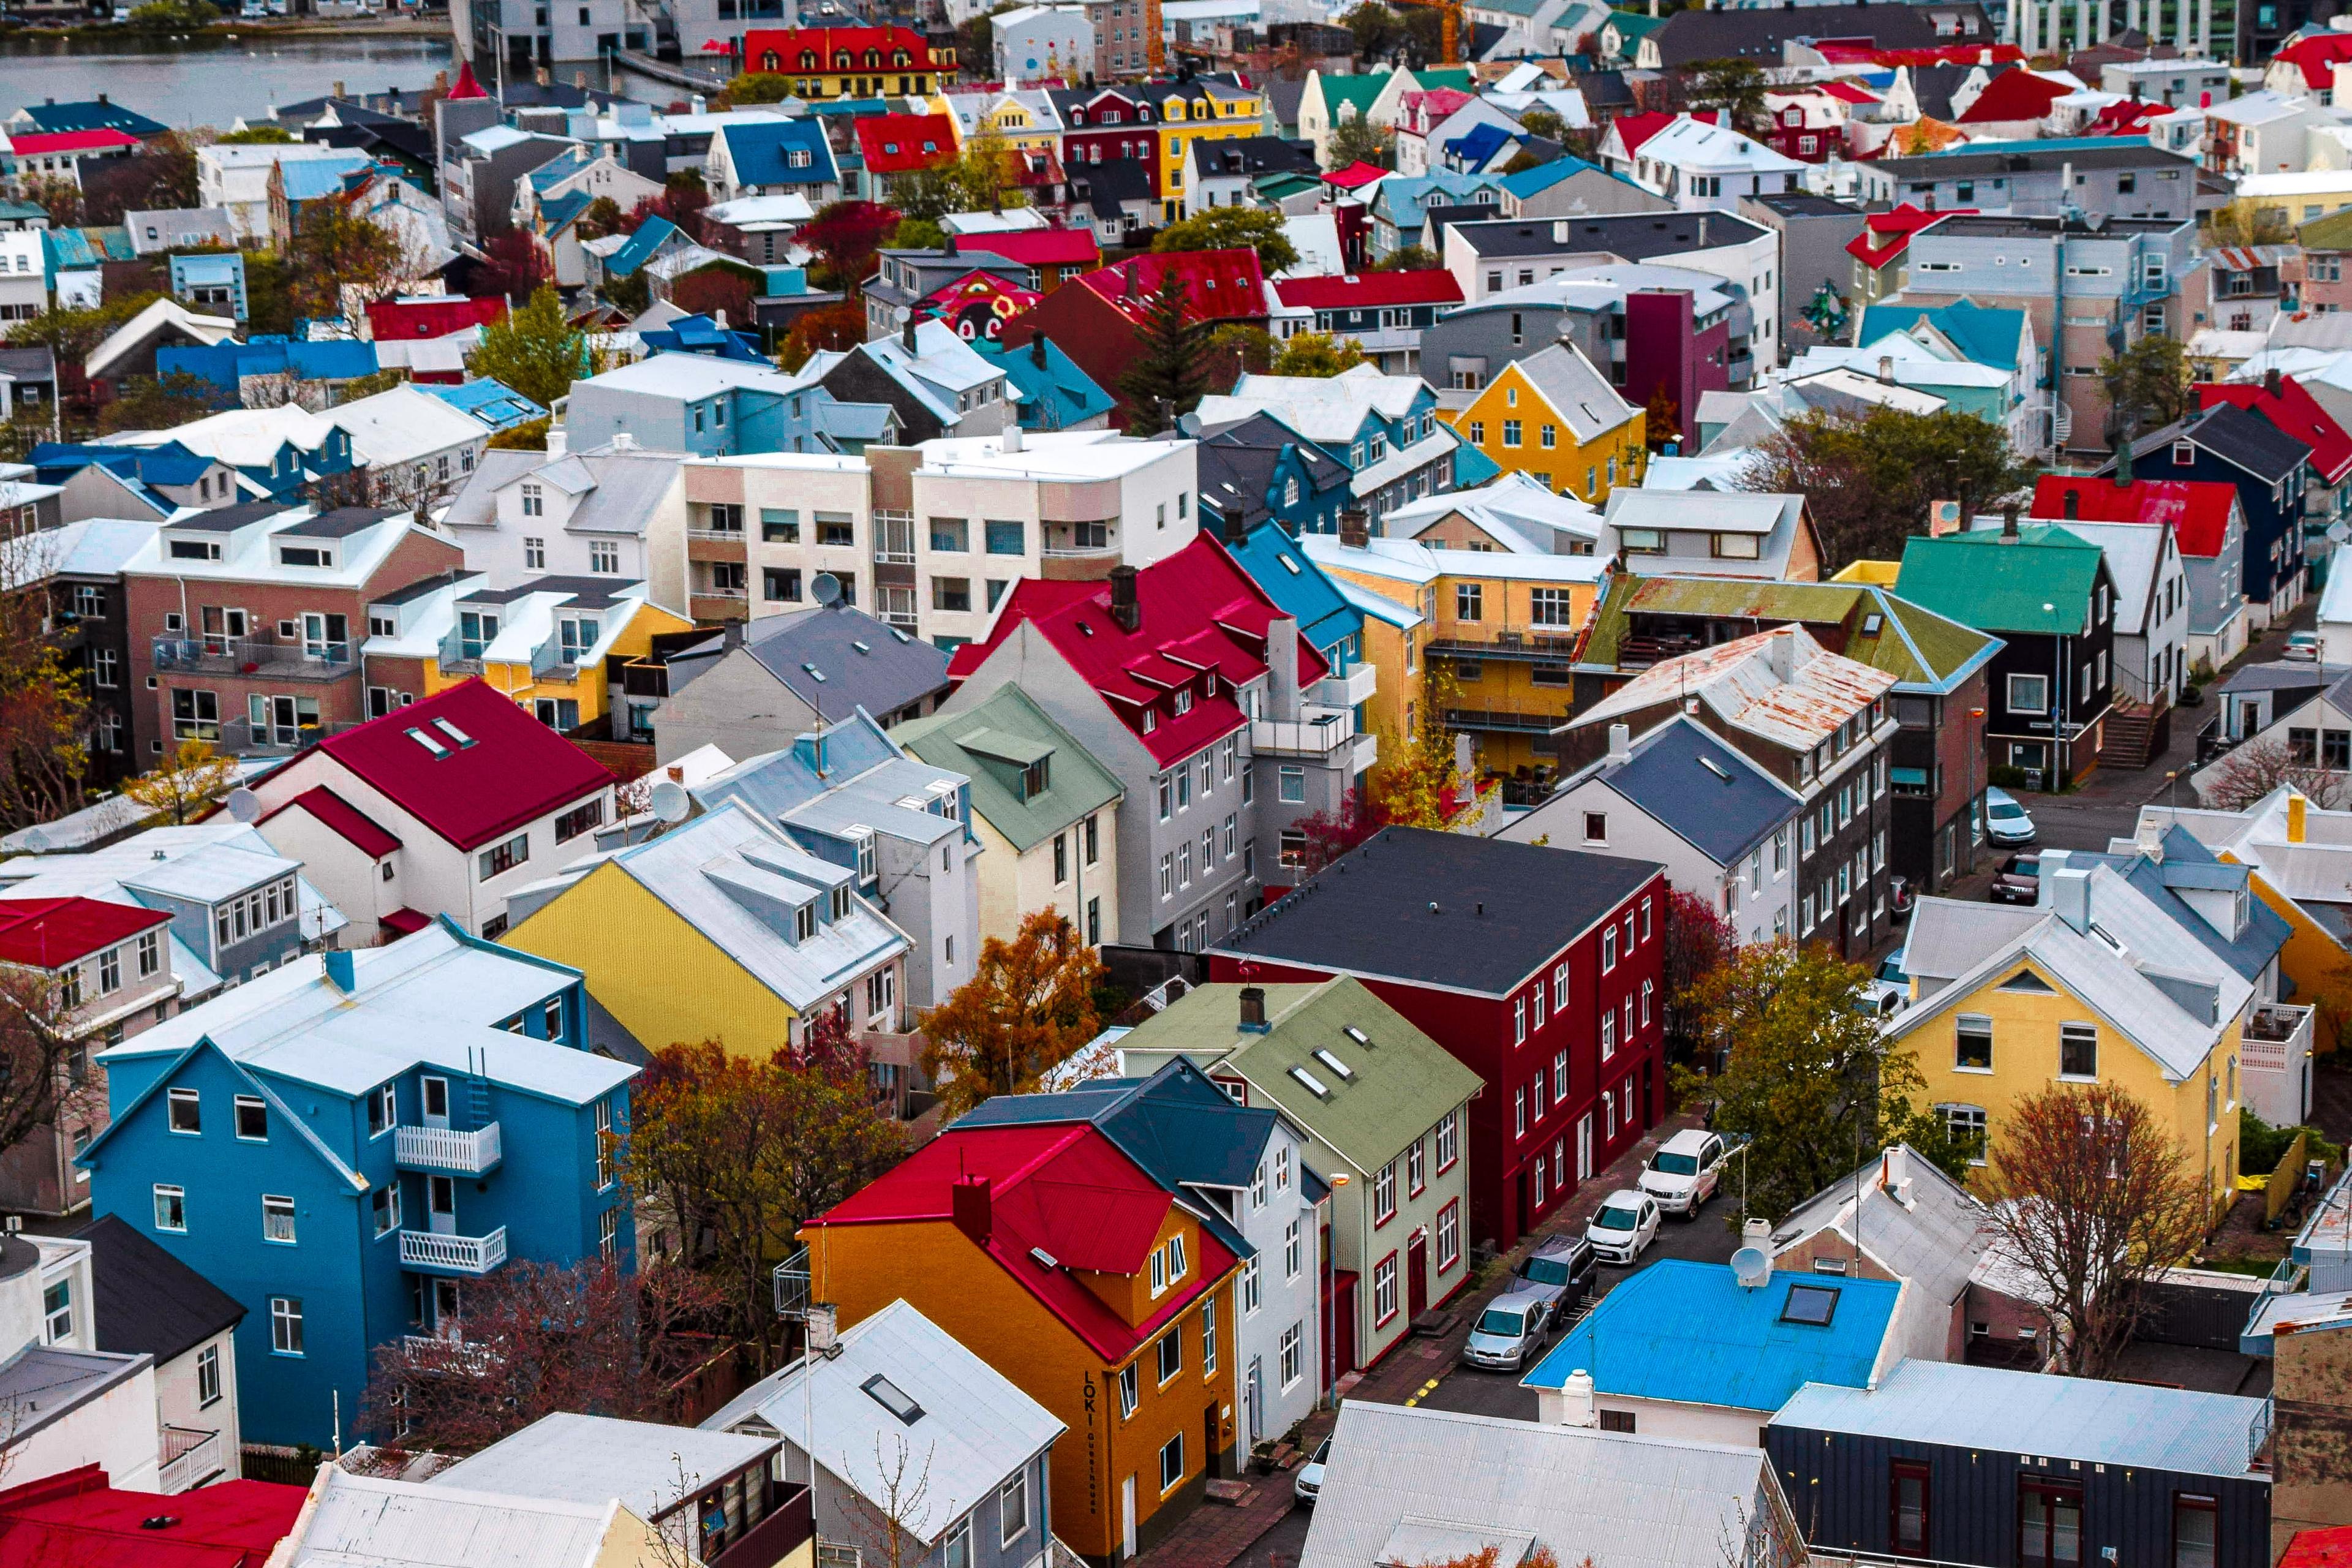 The colorful houses of Reykjavík